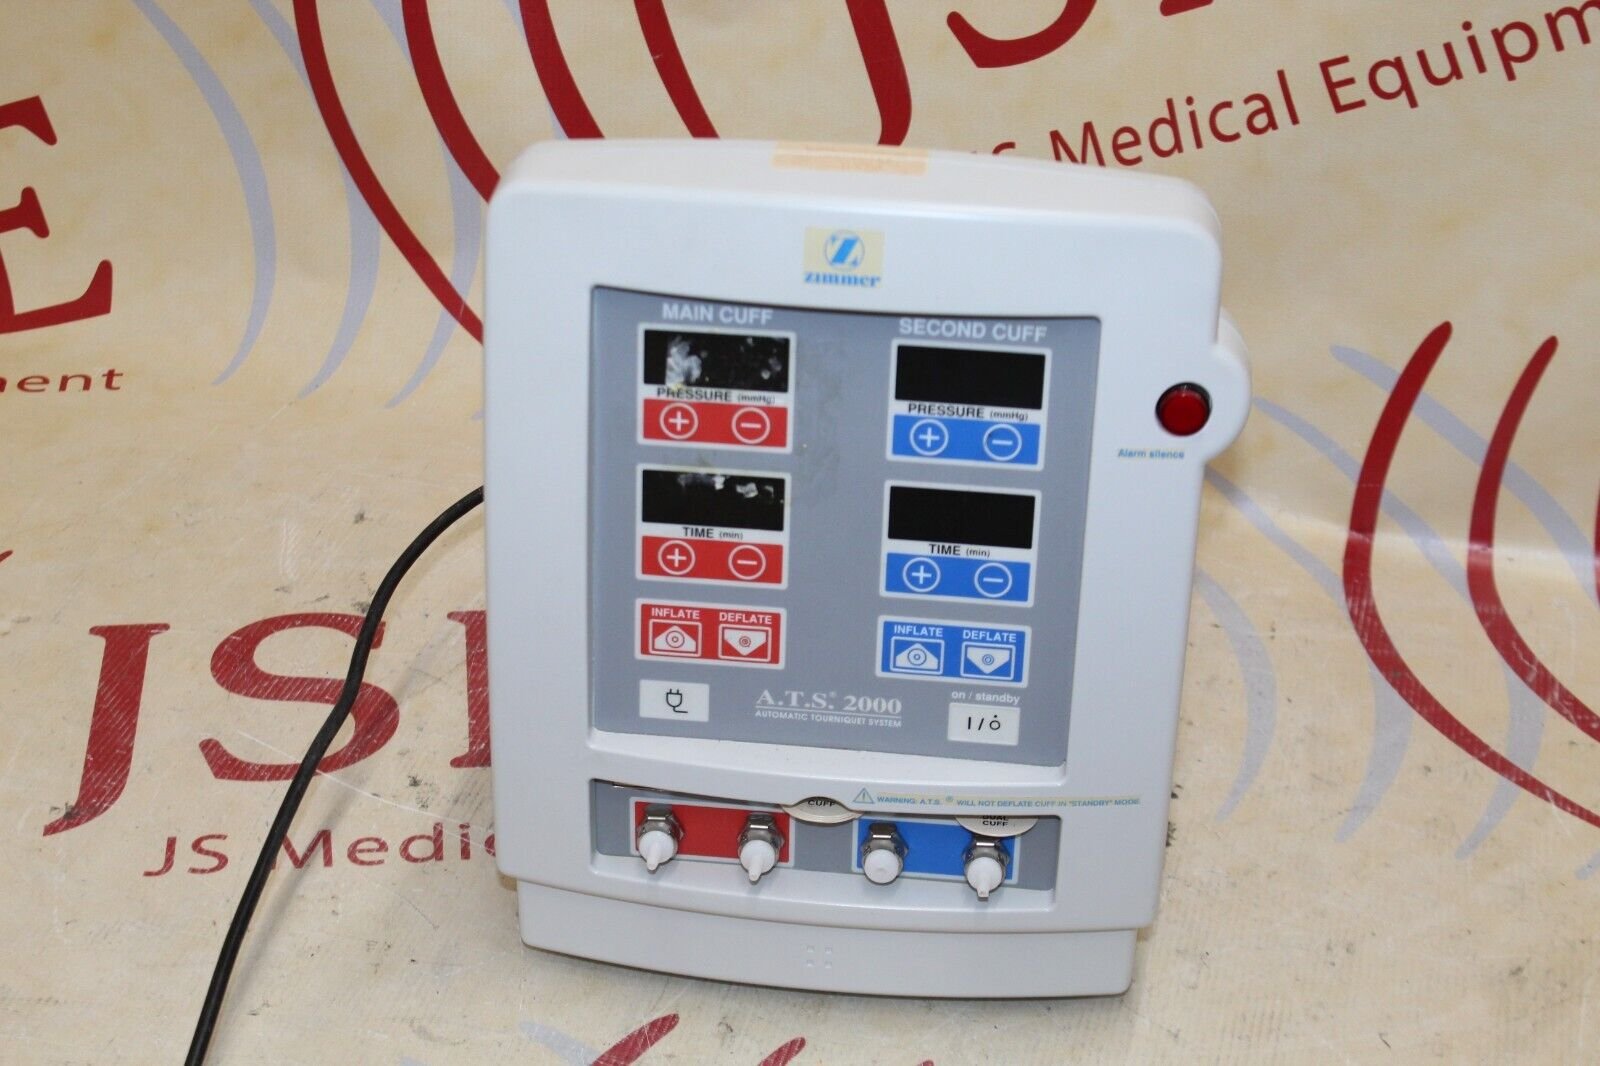 Zimmer A.T.S. 2000 Automatic Tourniquet System – JS Medical Equipment